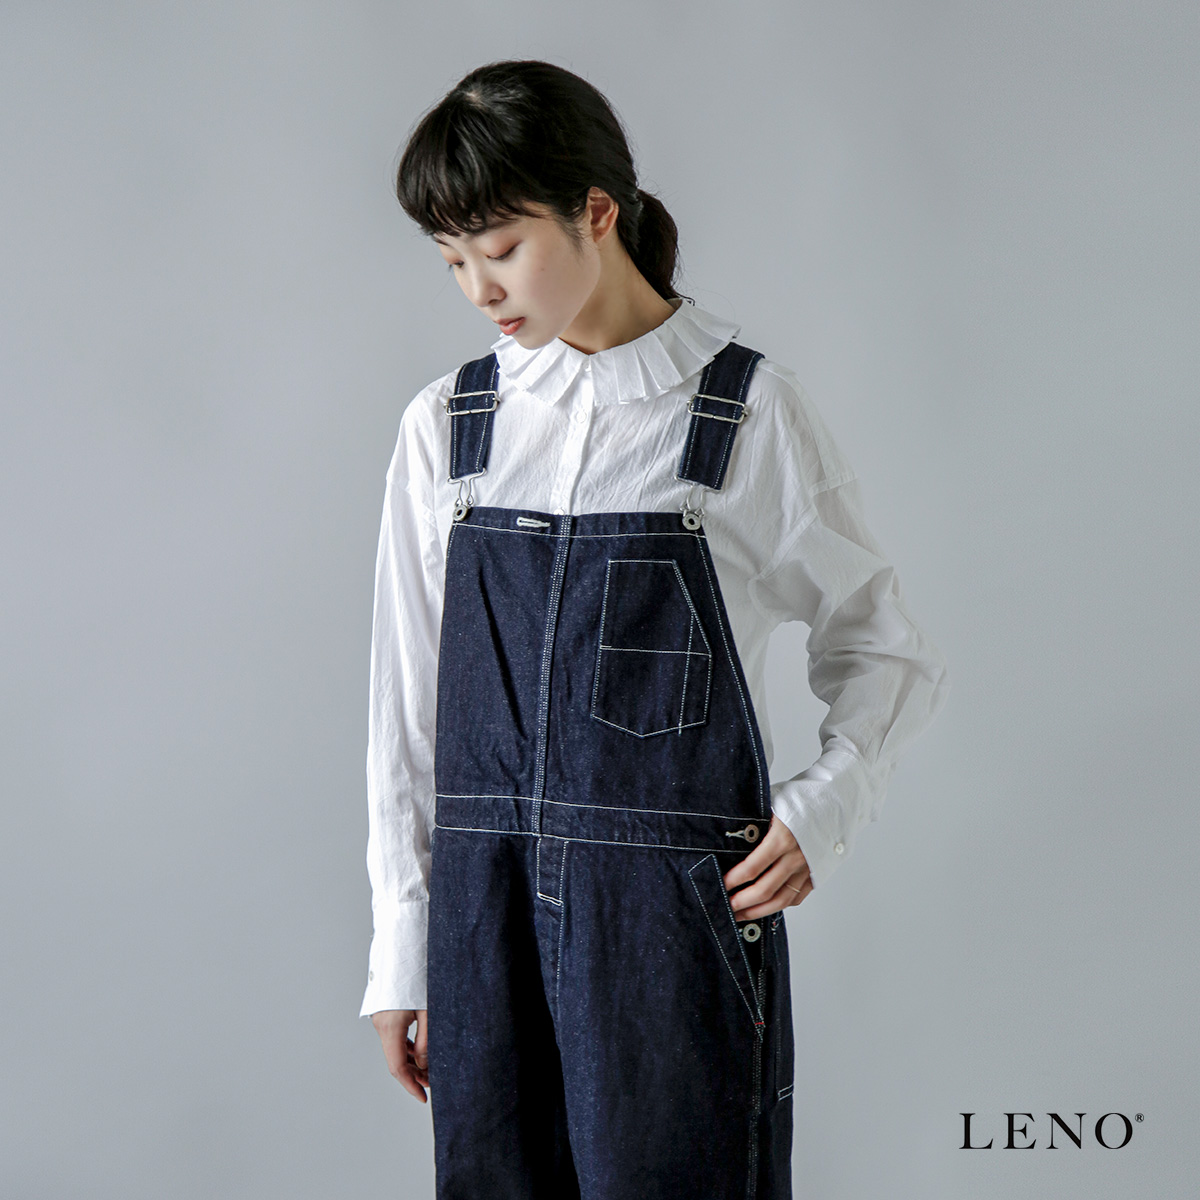 LENO(リノ)セルヴィッチデニム オーバーオール leno-pt005-008☆5